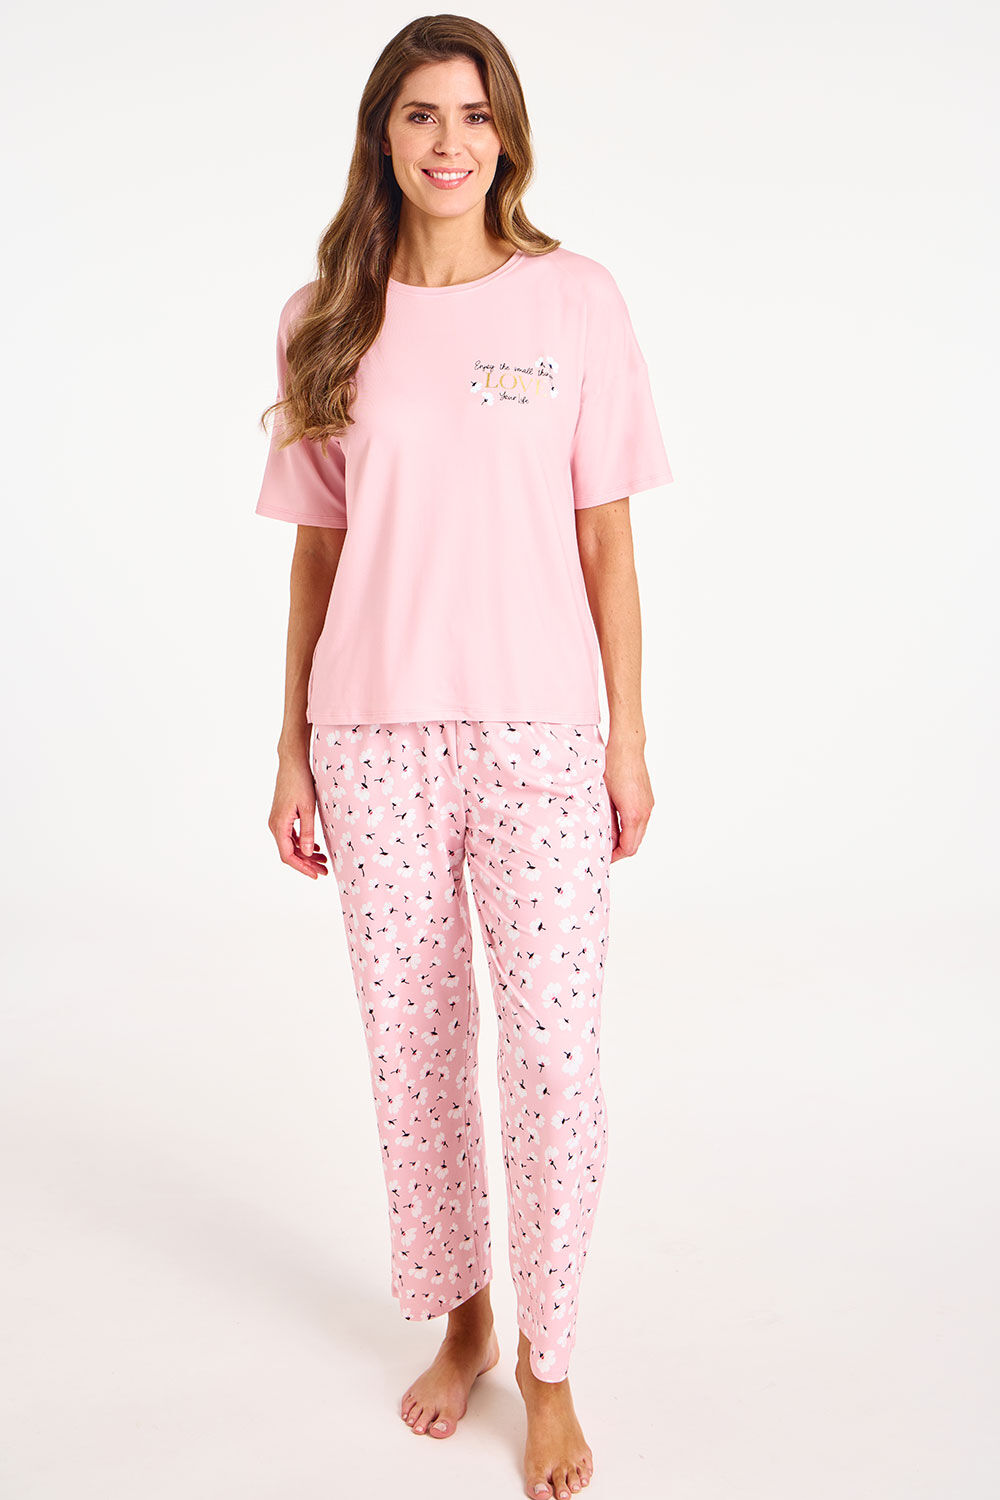 Bonmarche Short Sleeve Pink Floral Foil Print Pyjama Set, Size: 08-10